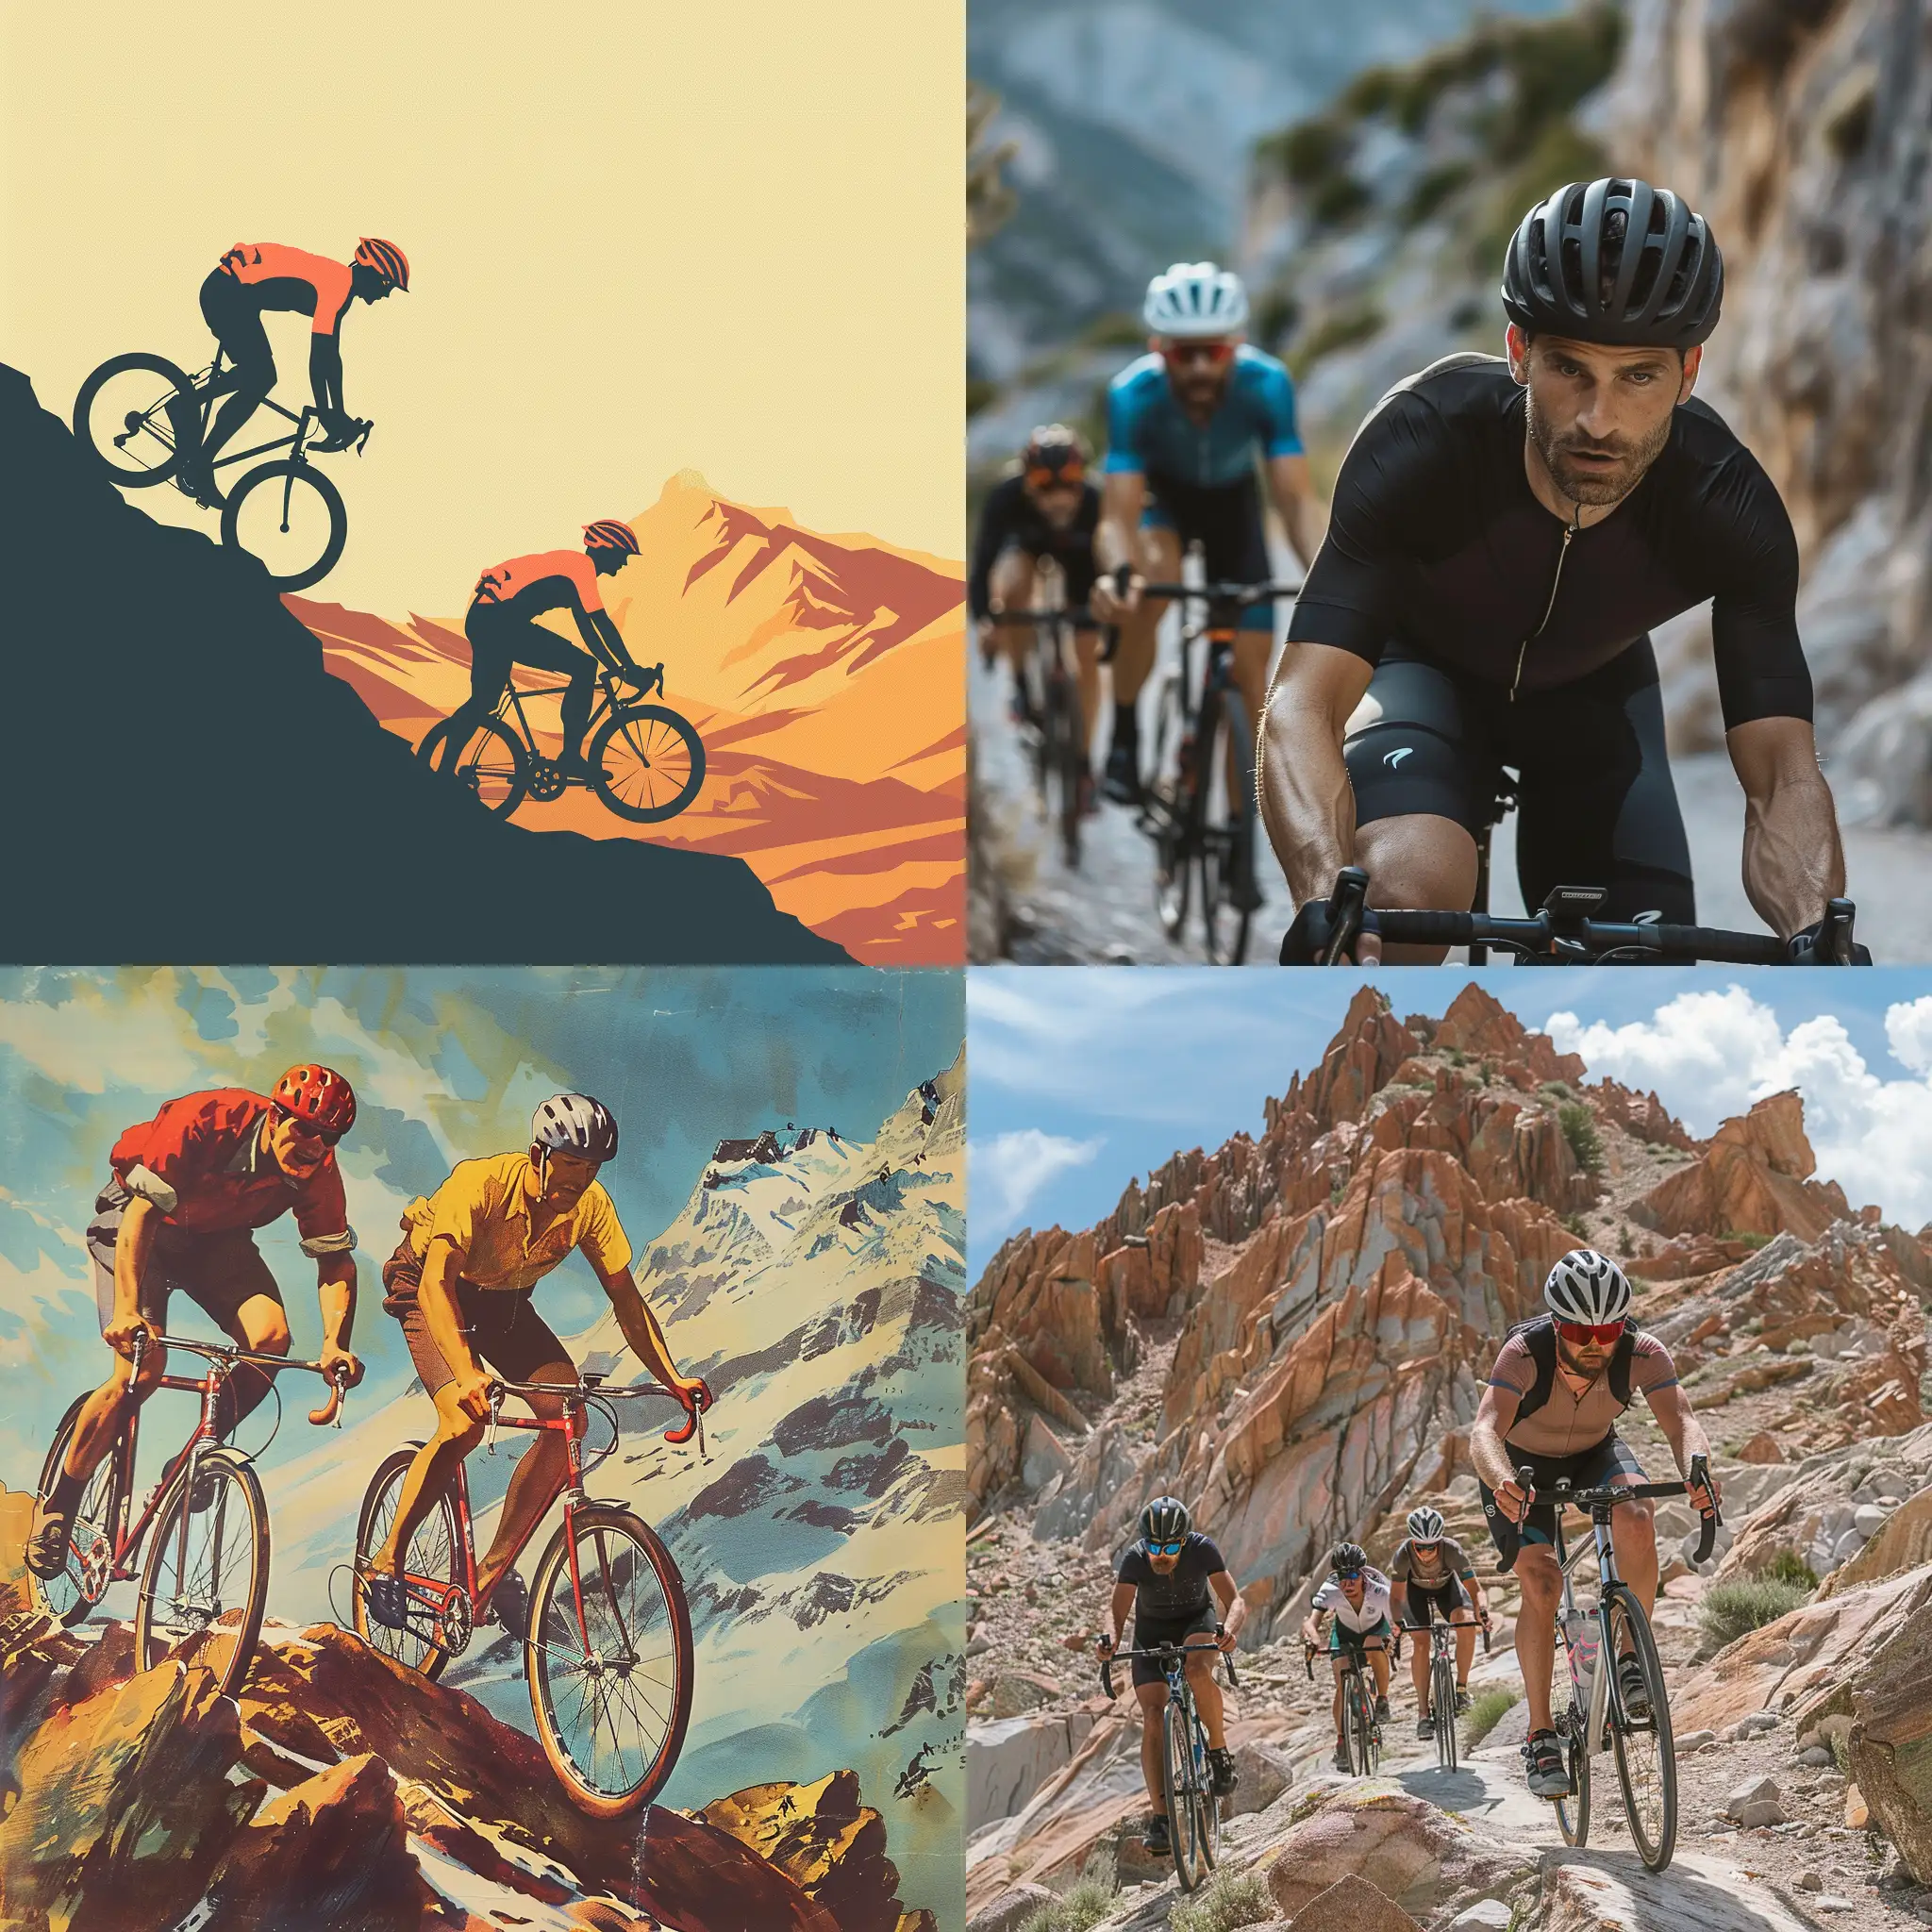 Adventurous-Cyclist-Ascending-a-Mountain